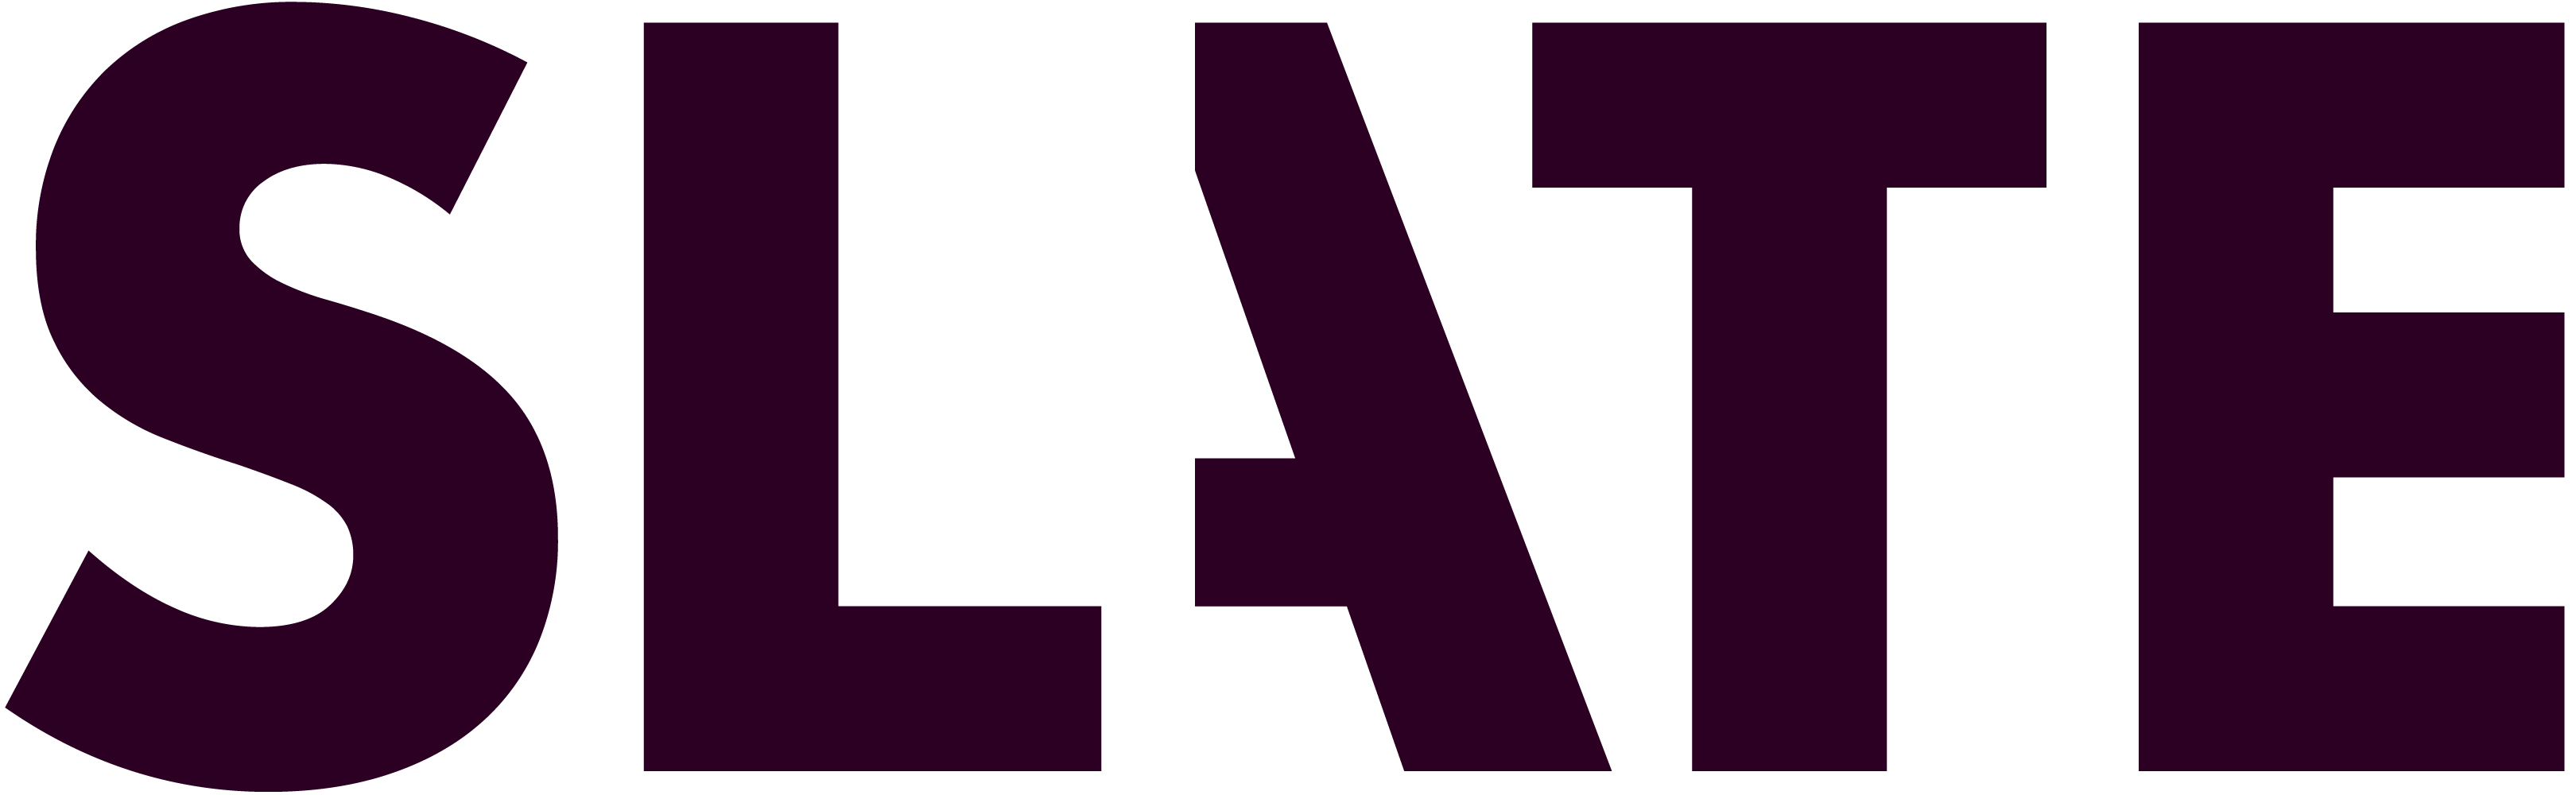 slate.com logo